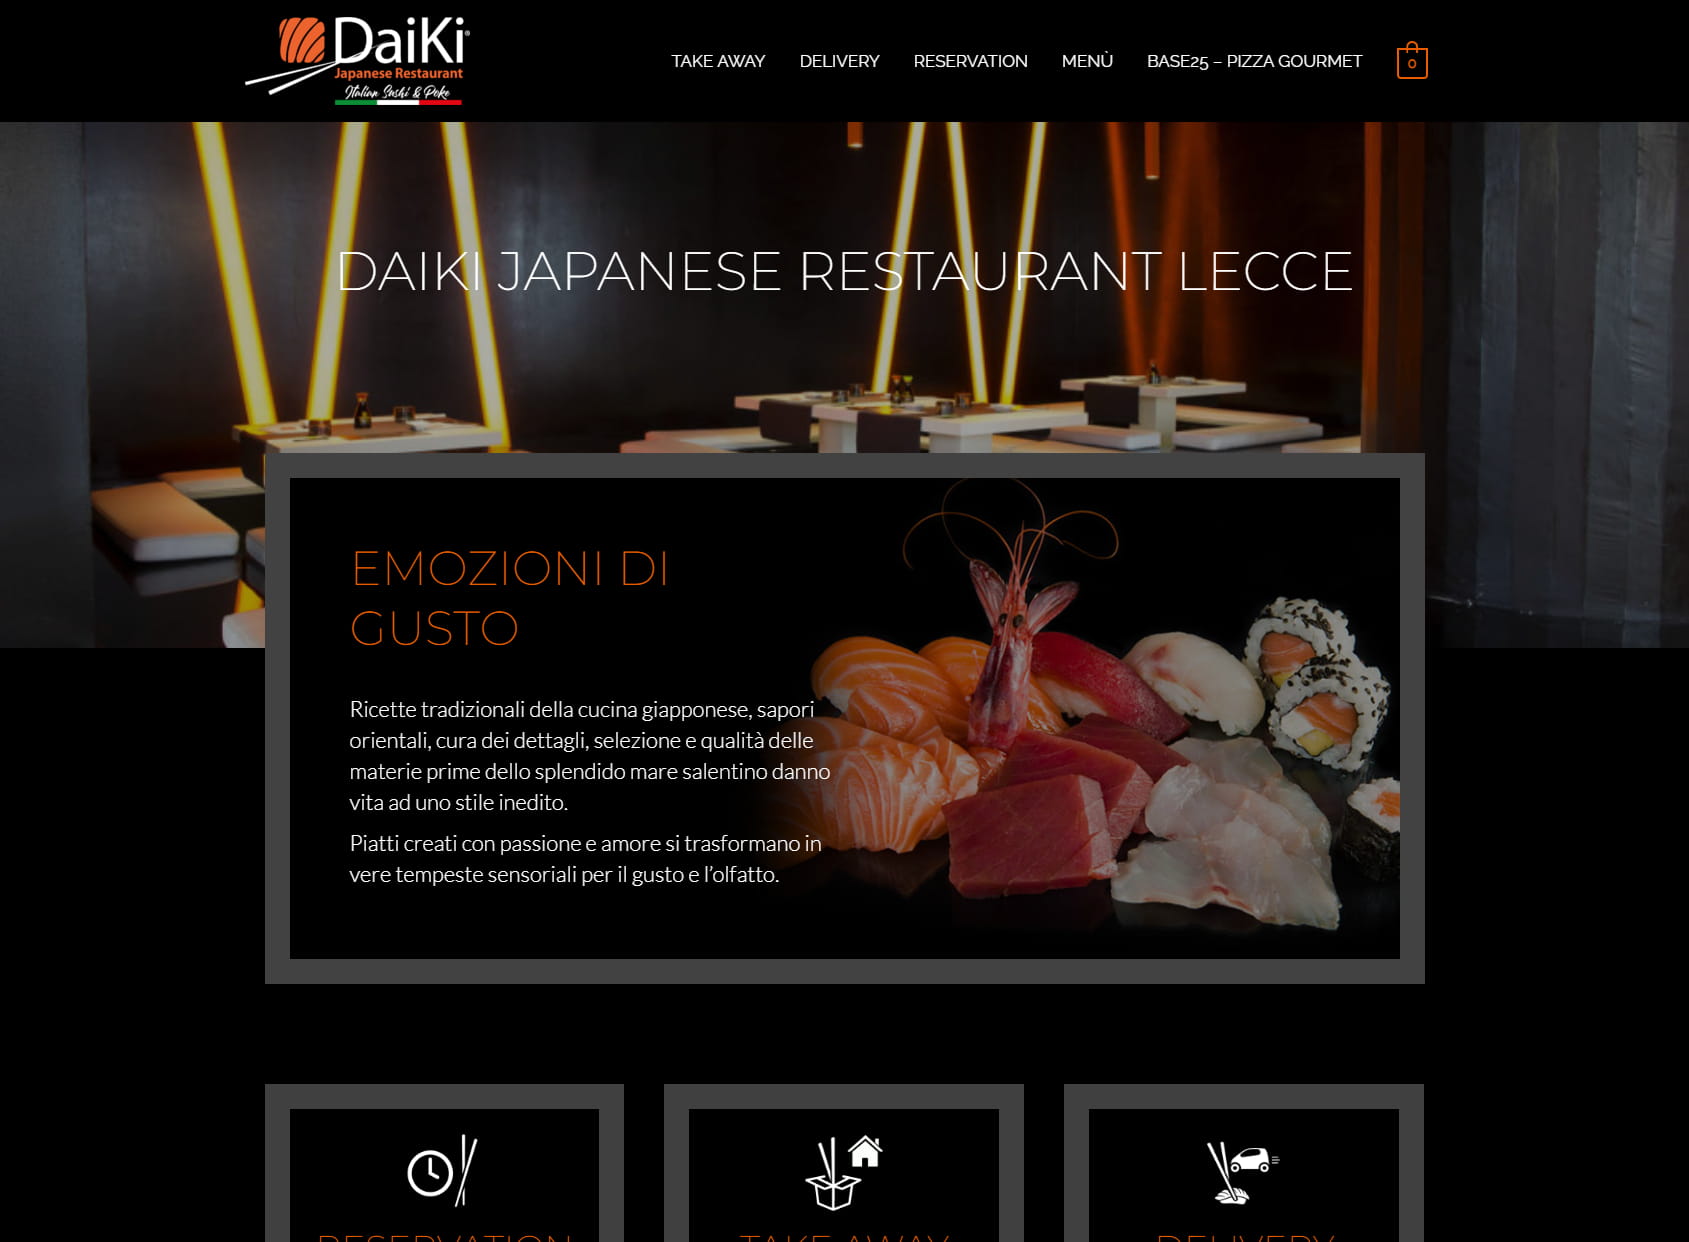 Daiki Japanese Restaurant Lecce | Ristorante | Take-Away | Delivery - Cucina Giapponese Gestione Italiana